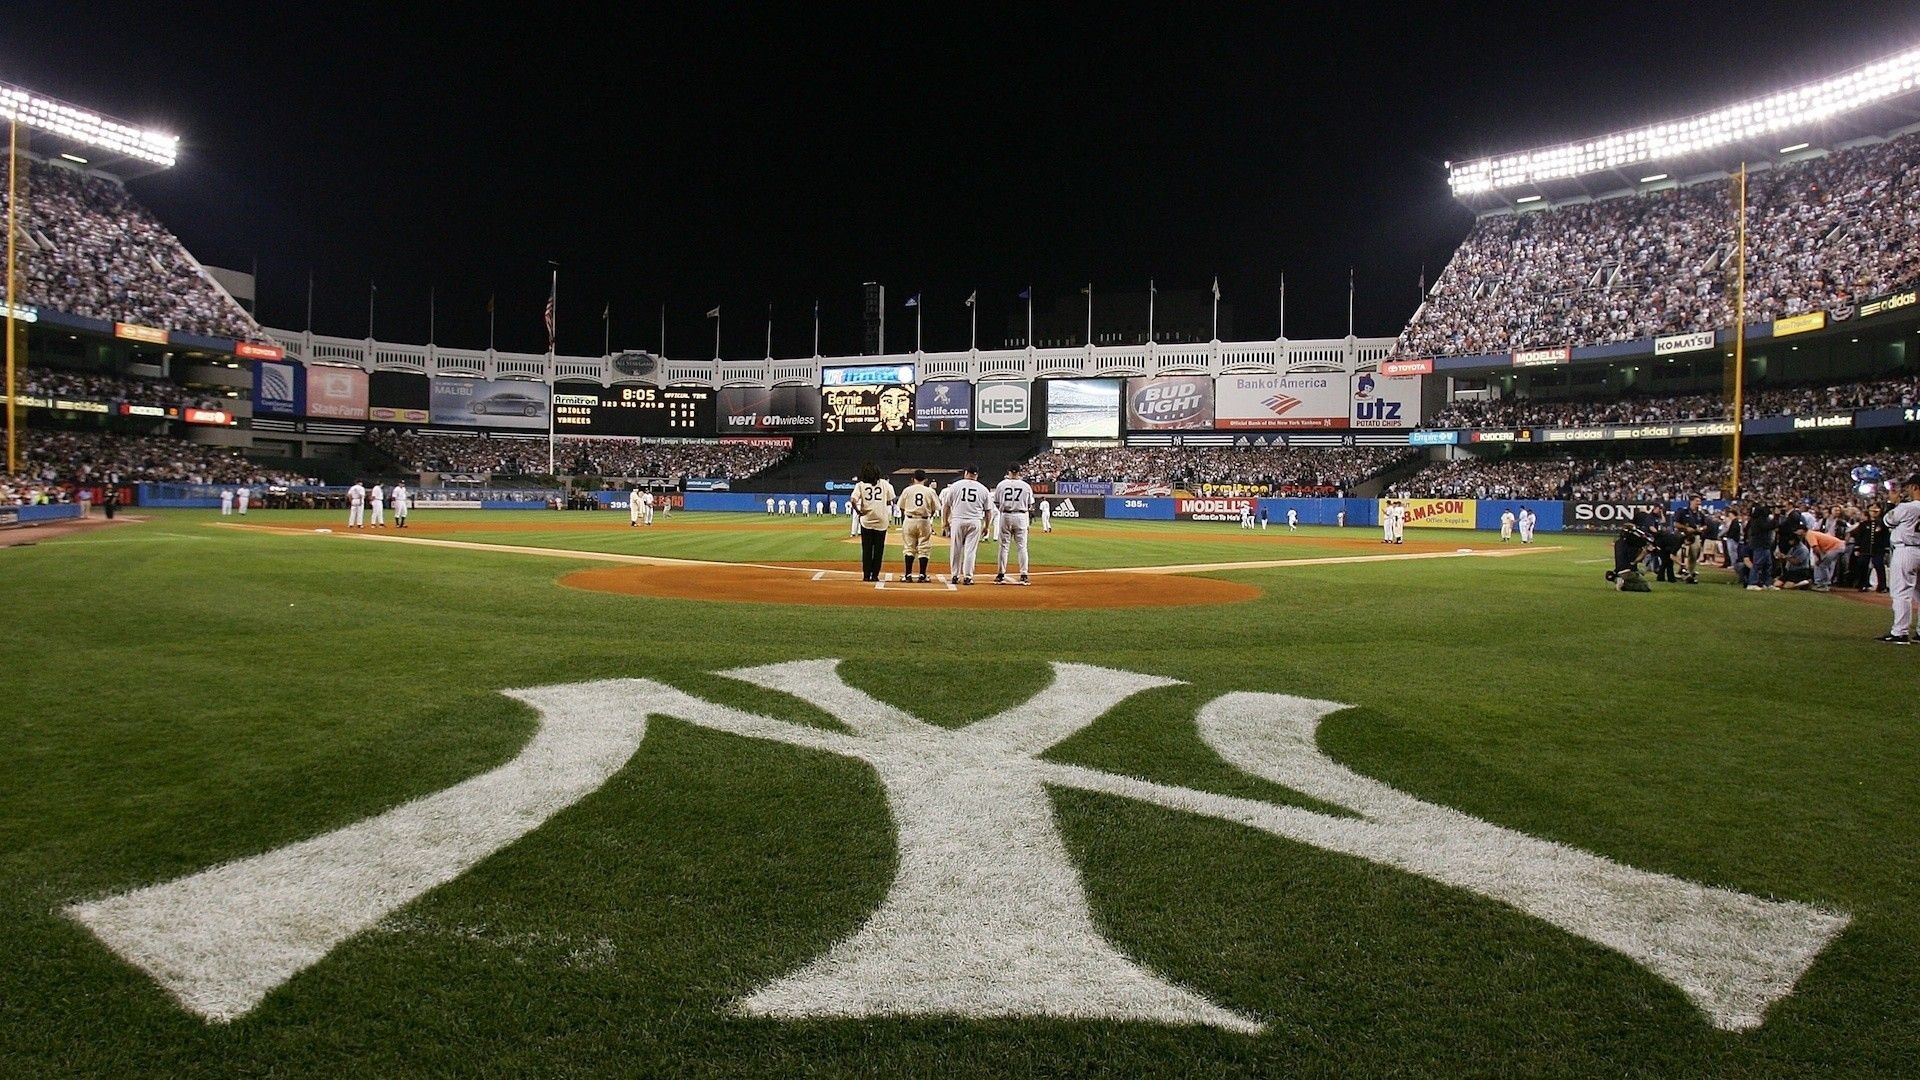 New York Yankees: Yankee Stadium, The third-largest stadium in Major League Baseball by seating capacity. 1920x1080 Full HD Wallpaper.